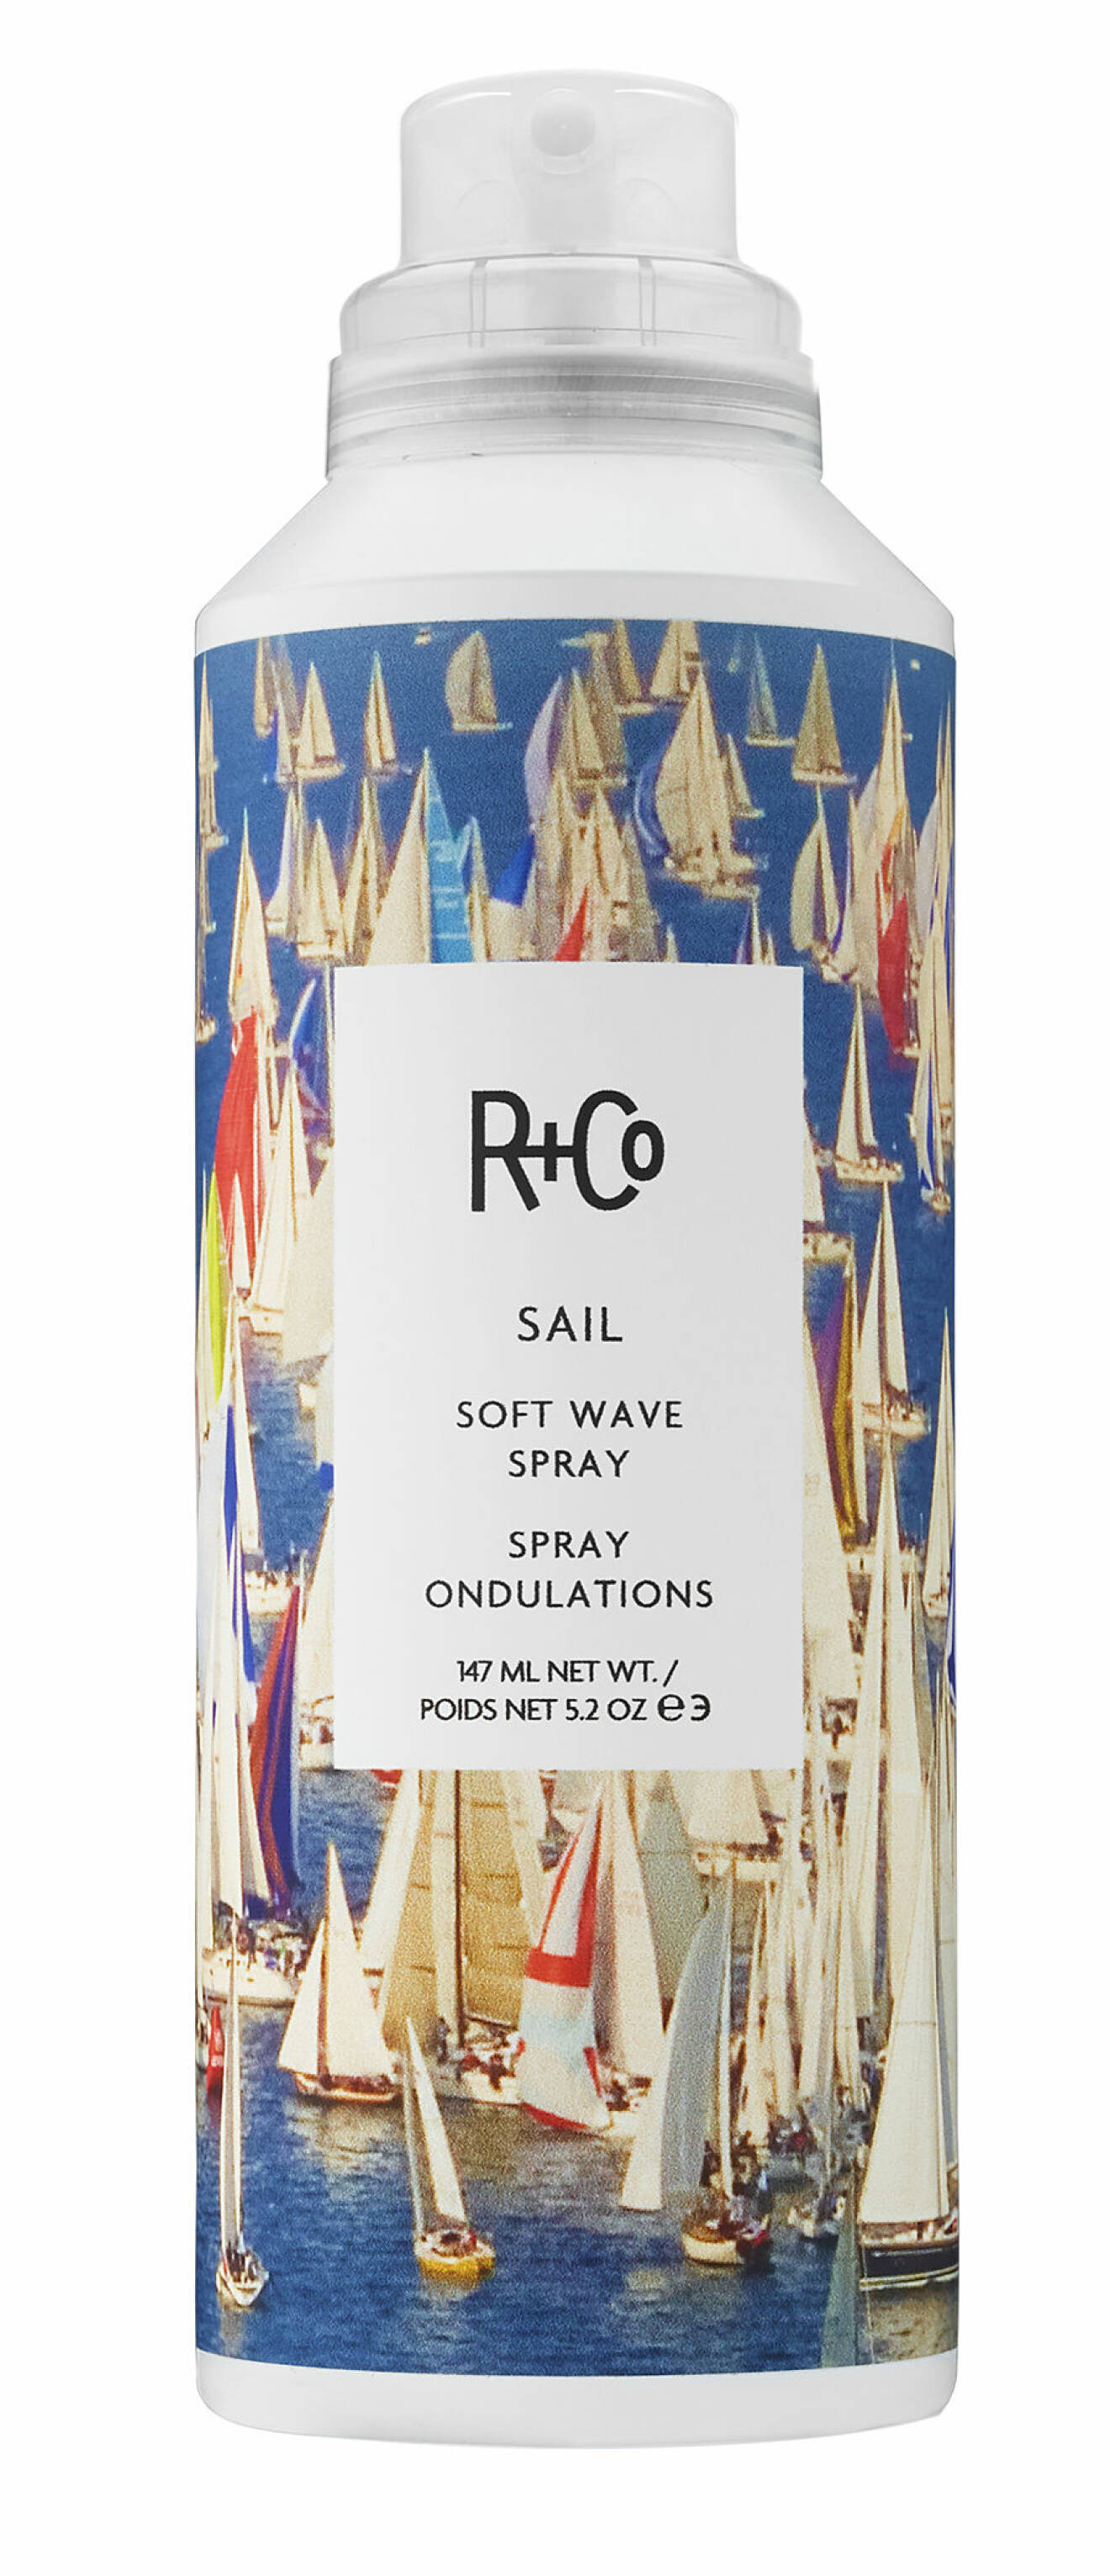 Sail soft wave spray, R & Co.